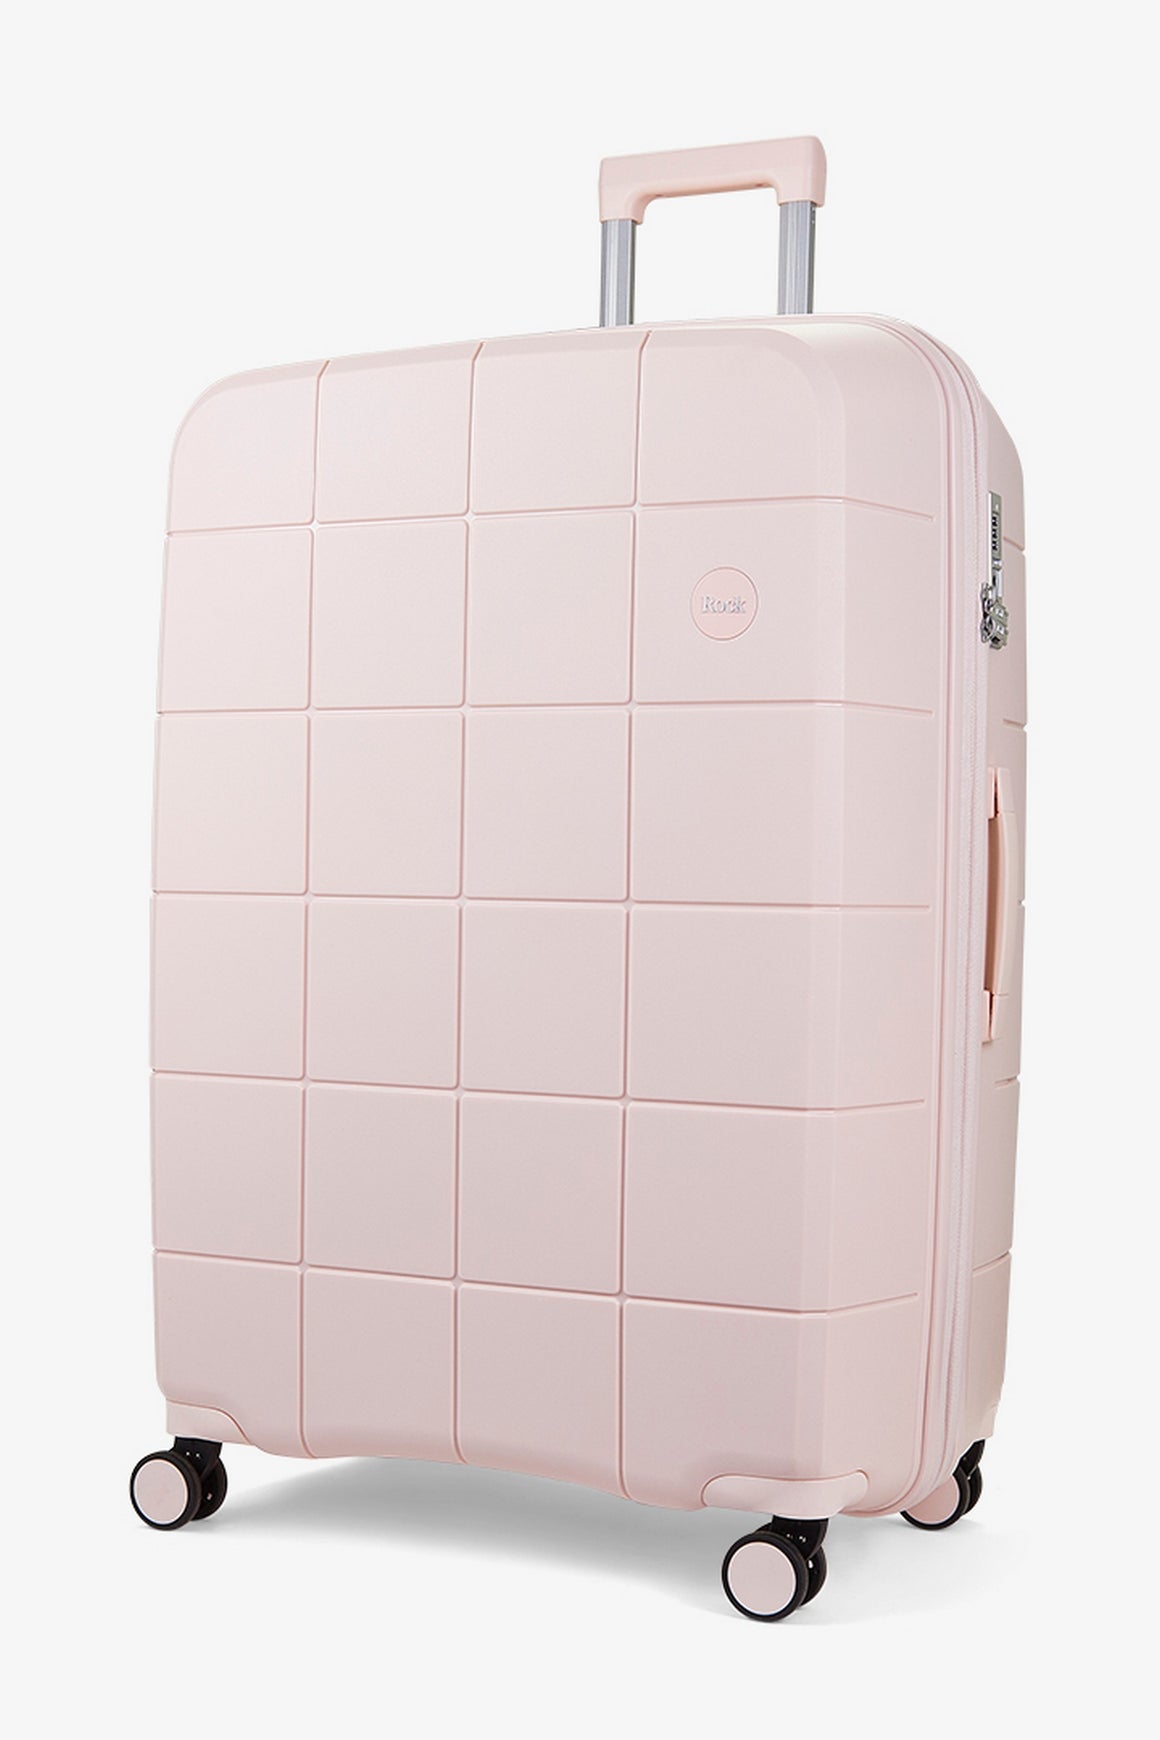 Pixel Large Suitcase